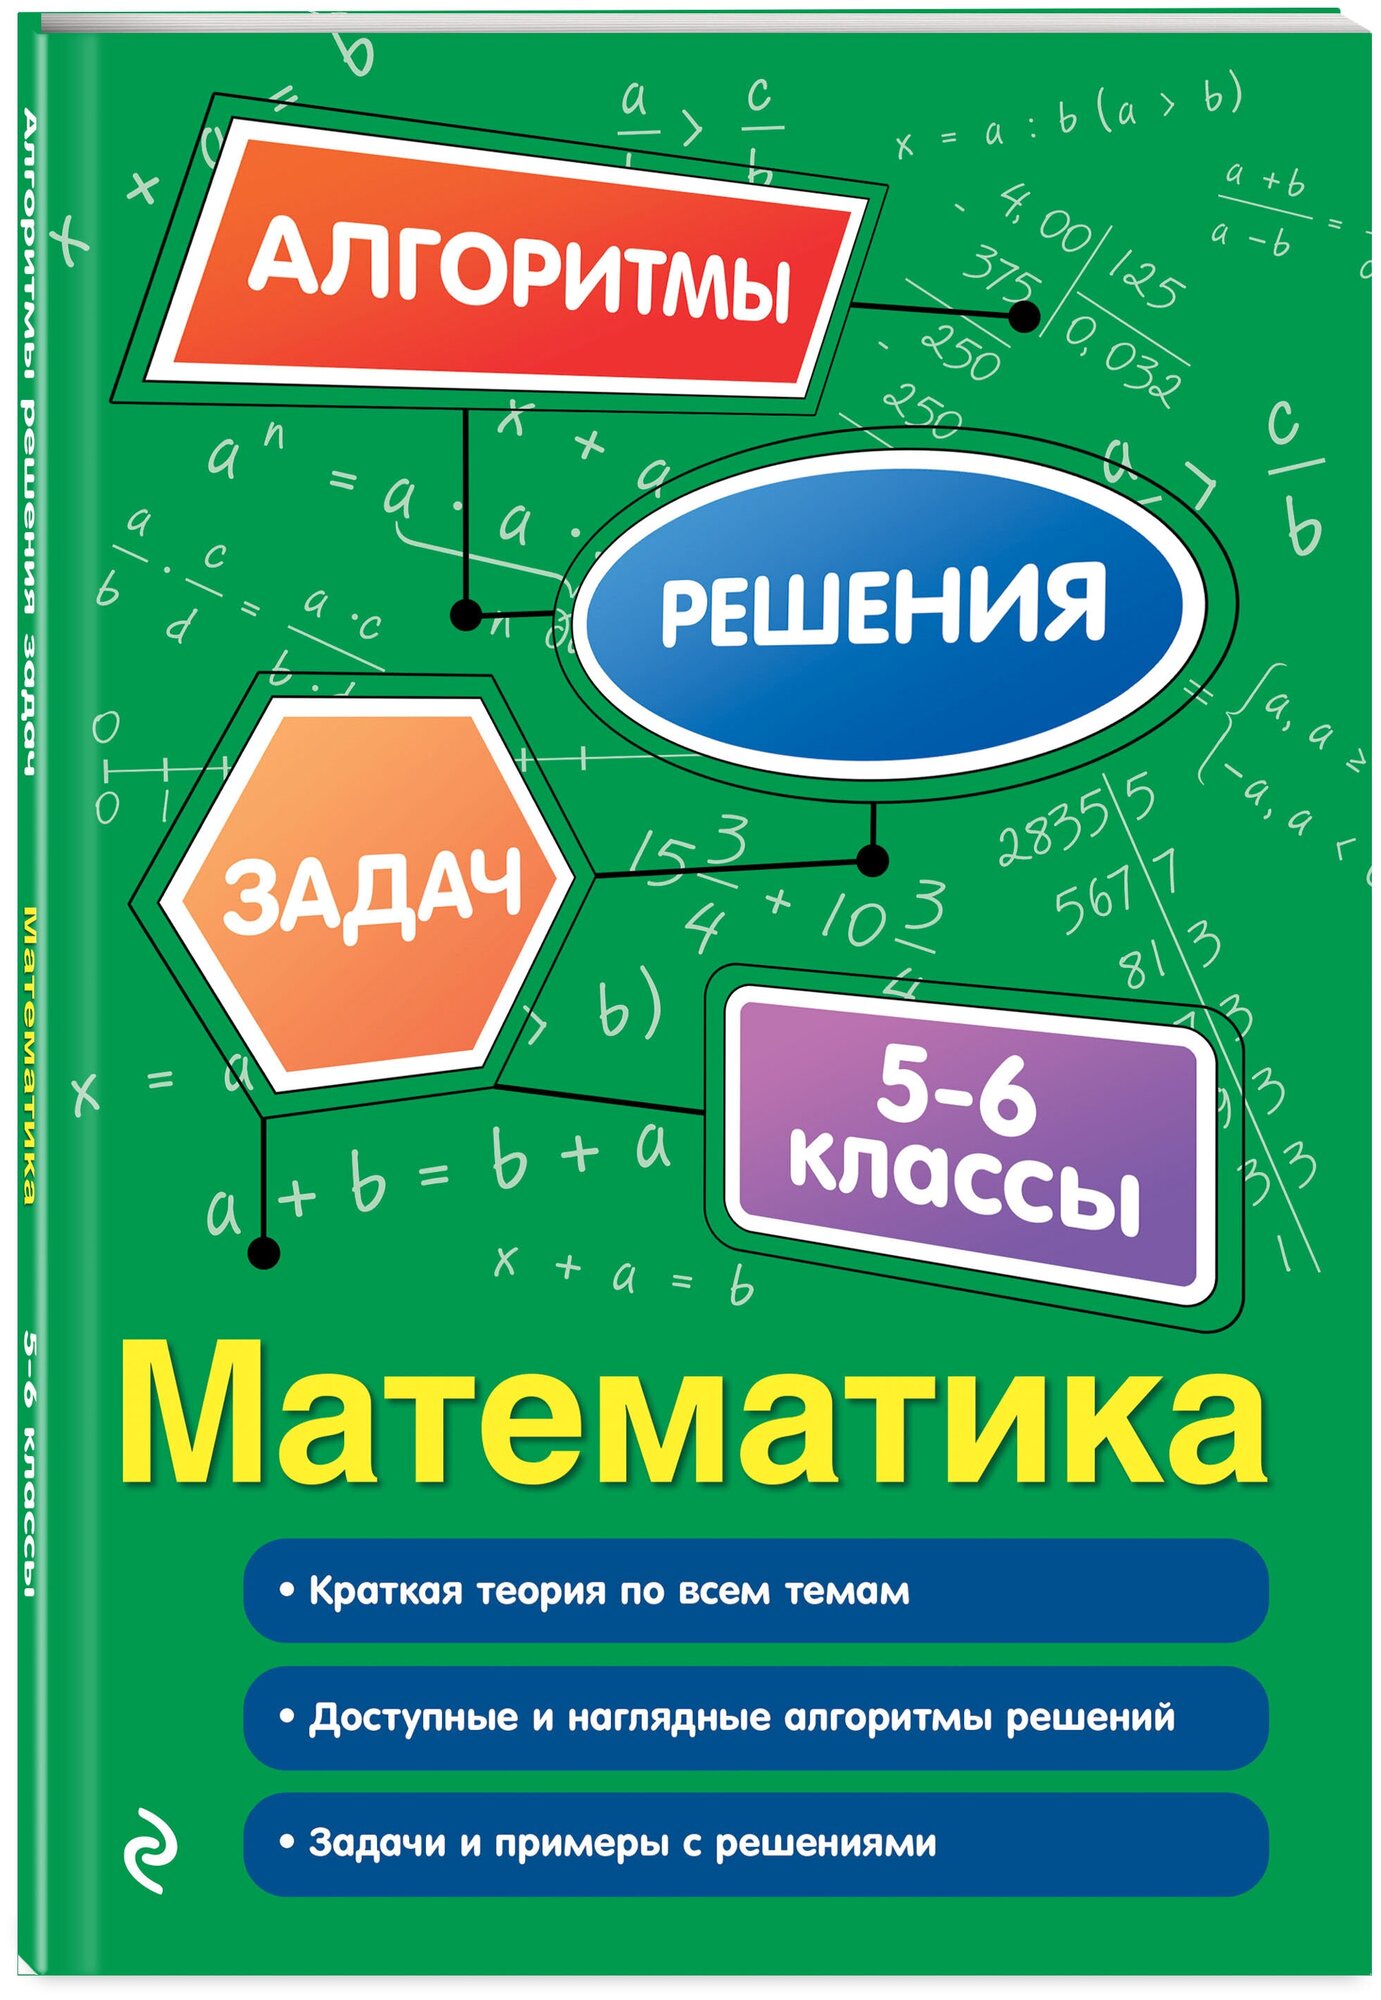 Виноградова Т. М. Математика. 5-6 классы